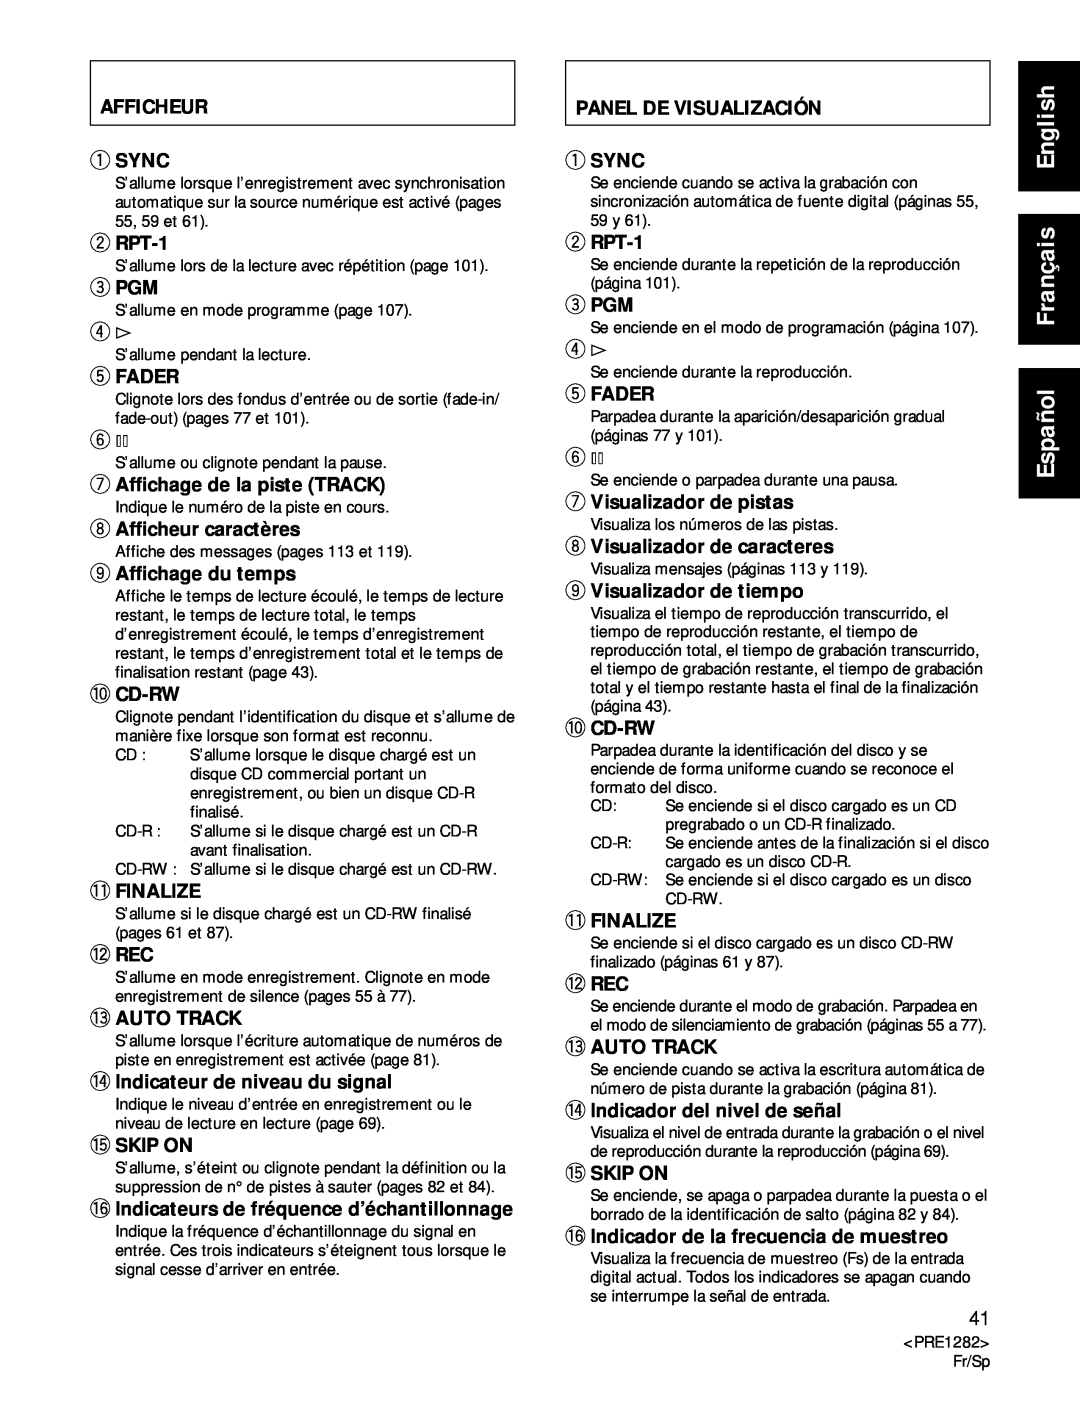 Americana Appliances CDR-850 manual Afficheur, Panel De Visualización, Español Français English 